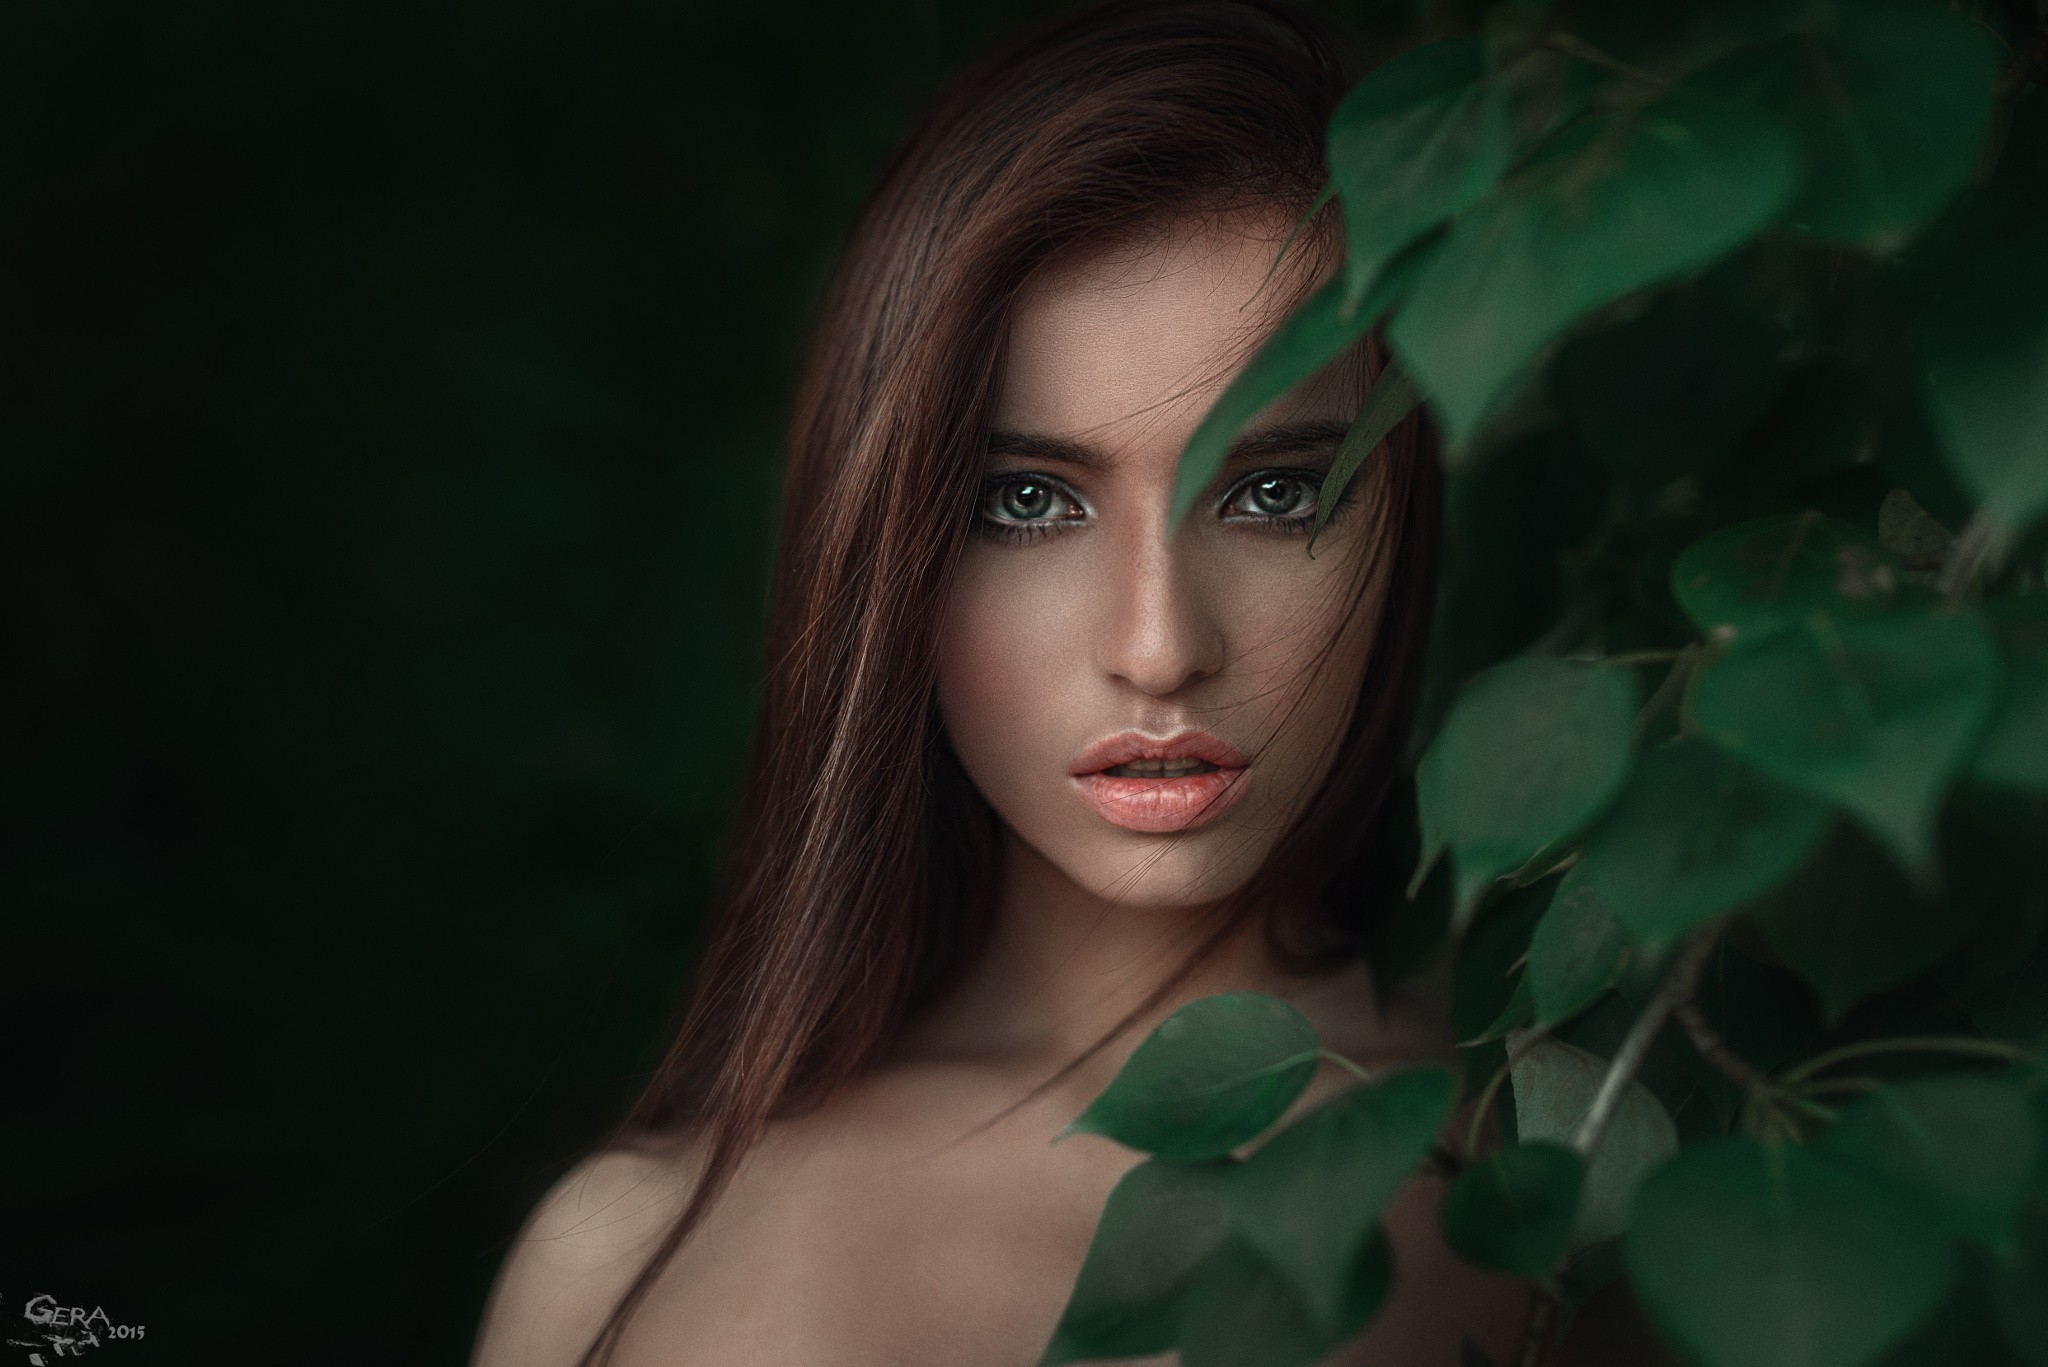 People 2048x1367 women model face portrait plants leaves looking at viewer brunette makeup 2015 (Year)